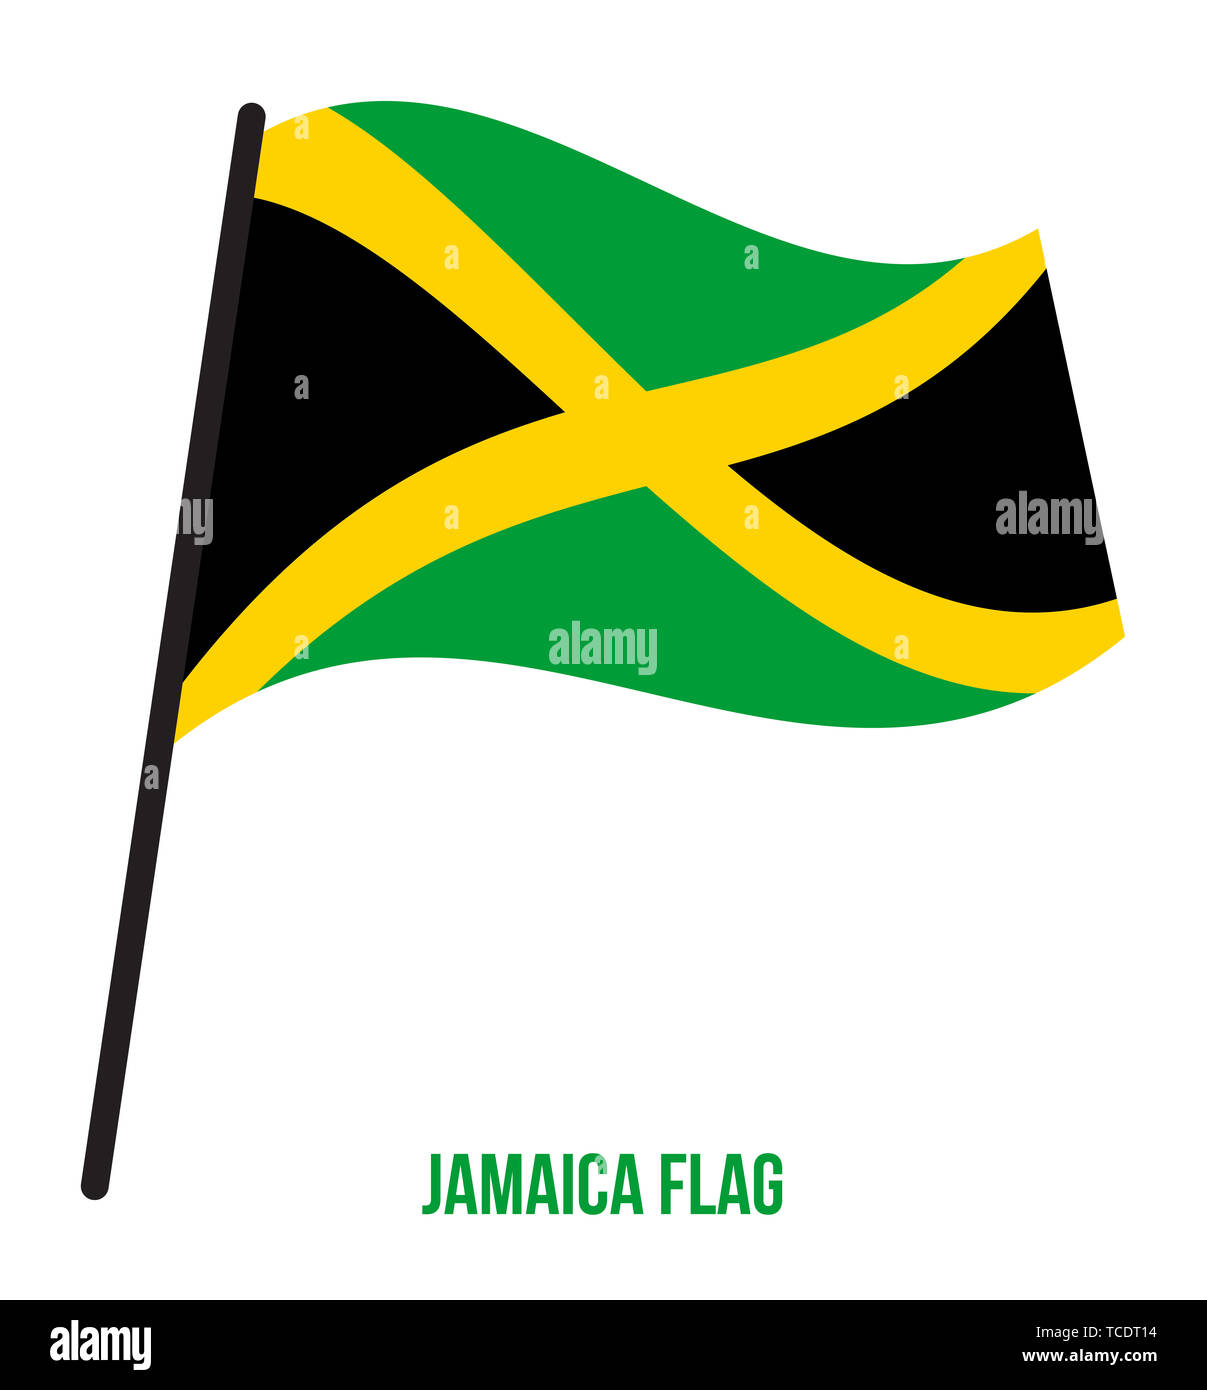 Jamaica Flag Waving Vector Illustration on White Background. Jamaica National Flag. Stock Photo